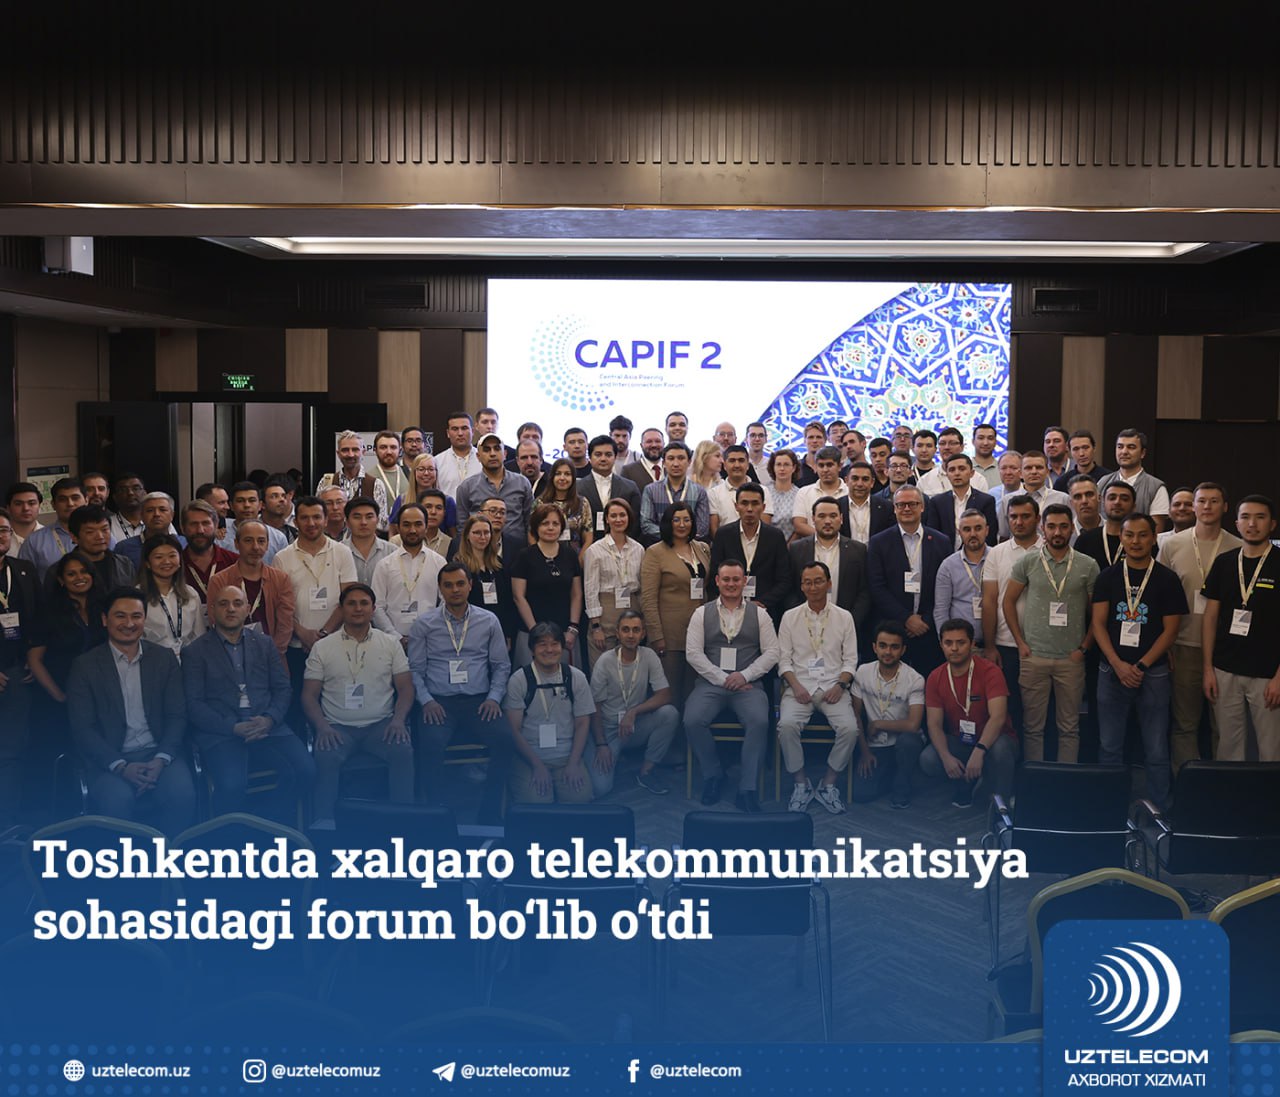 An international forum in the field of telecommunications was held in Tashkent